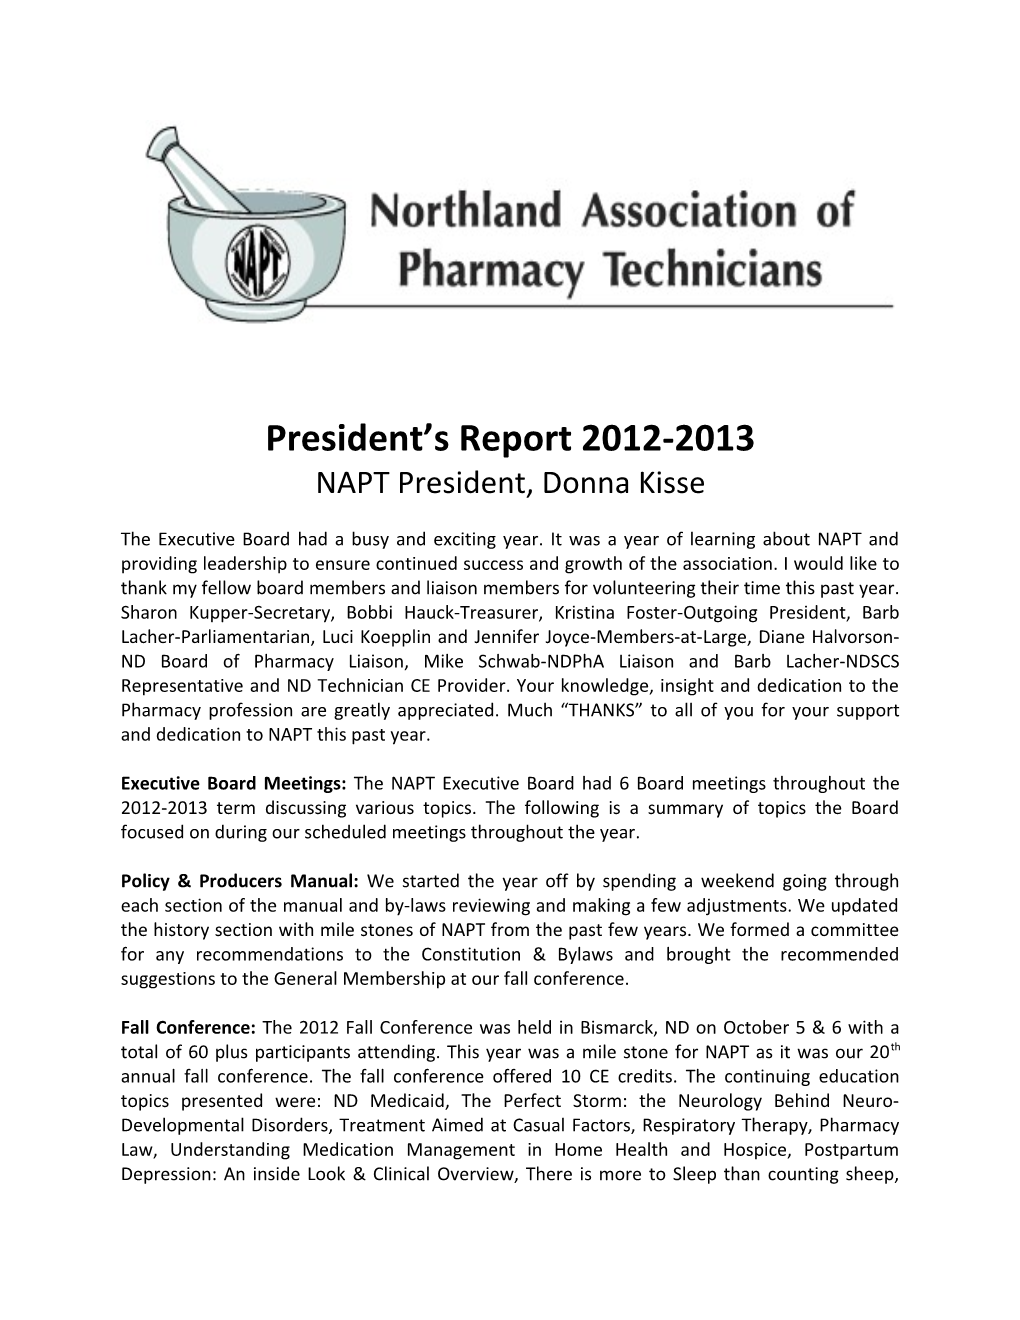 President S Report 2012-2013